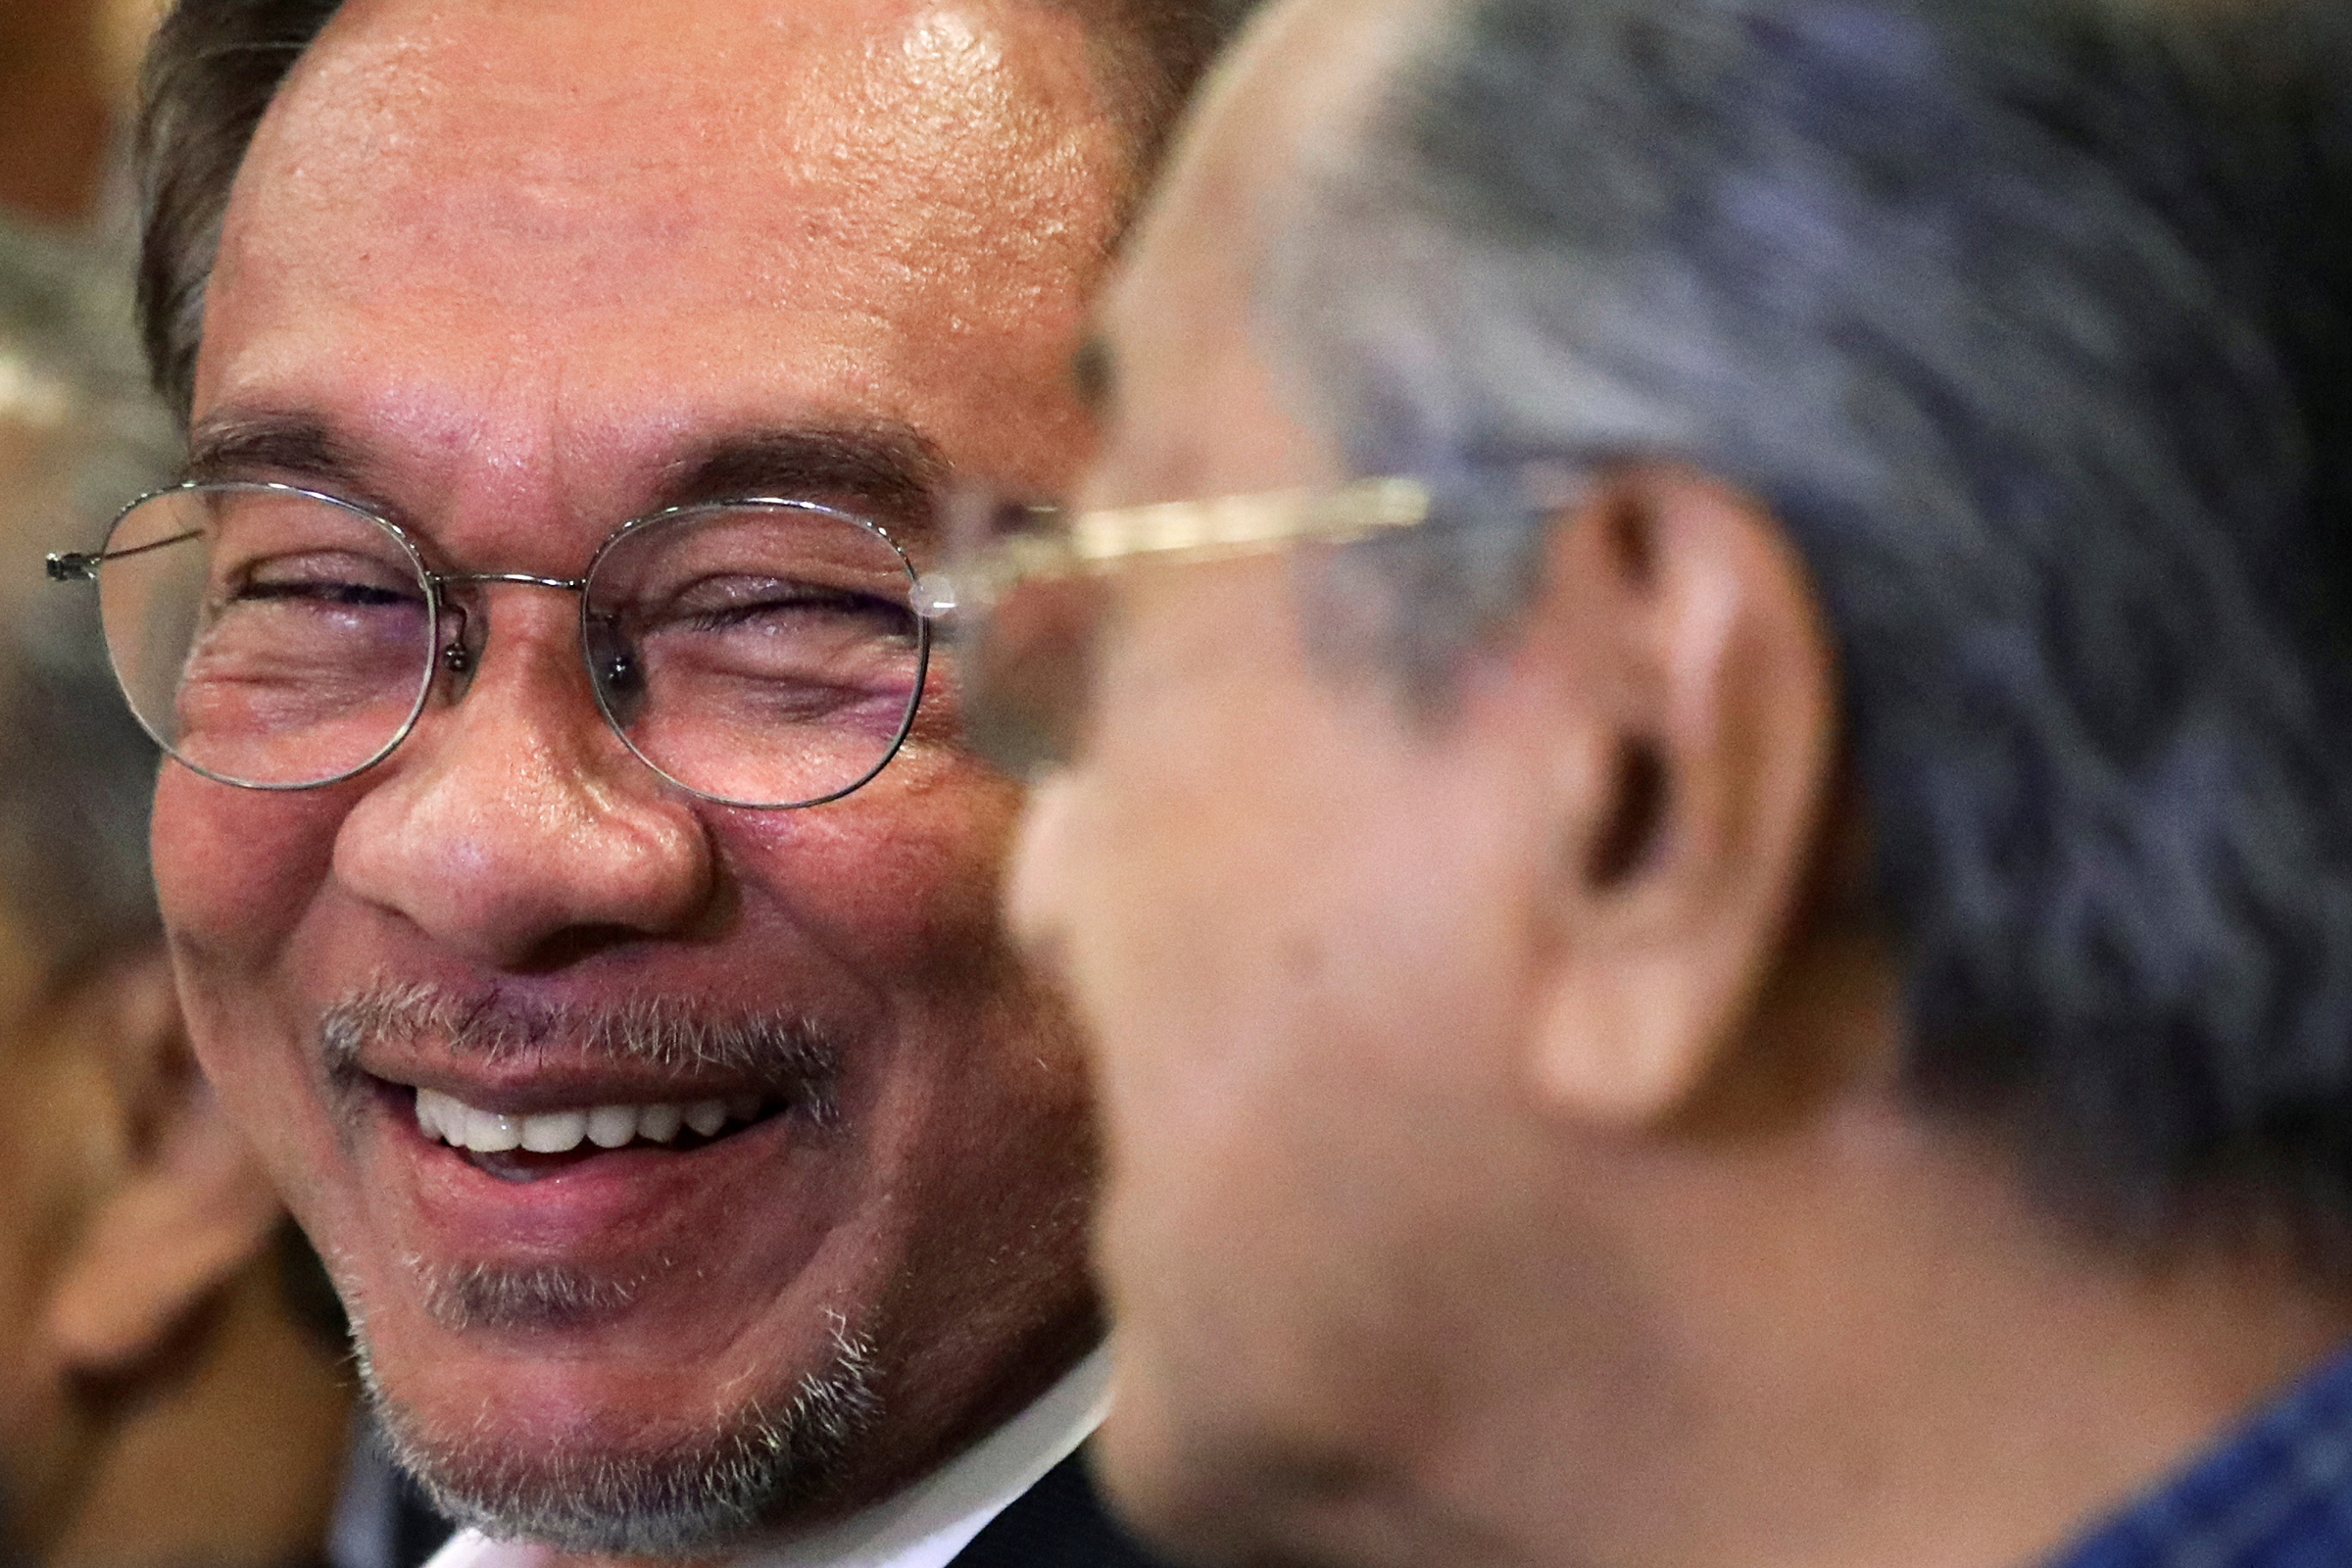 Malaysian politician Anwar Ibrahim looks at former Prime Minister Mahathir Mohamad during a news conference in Putrajaya, Malaysia, Nov. 23, 2019. (Lim Huey Teng—Reuters)